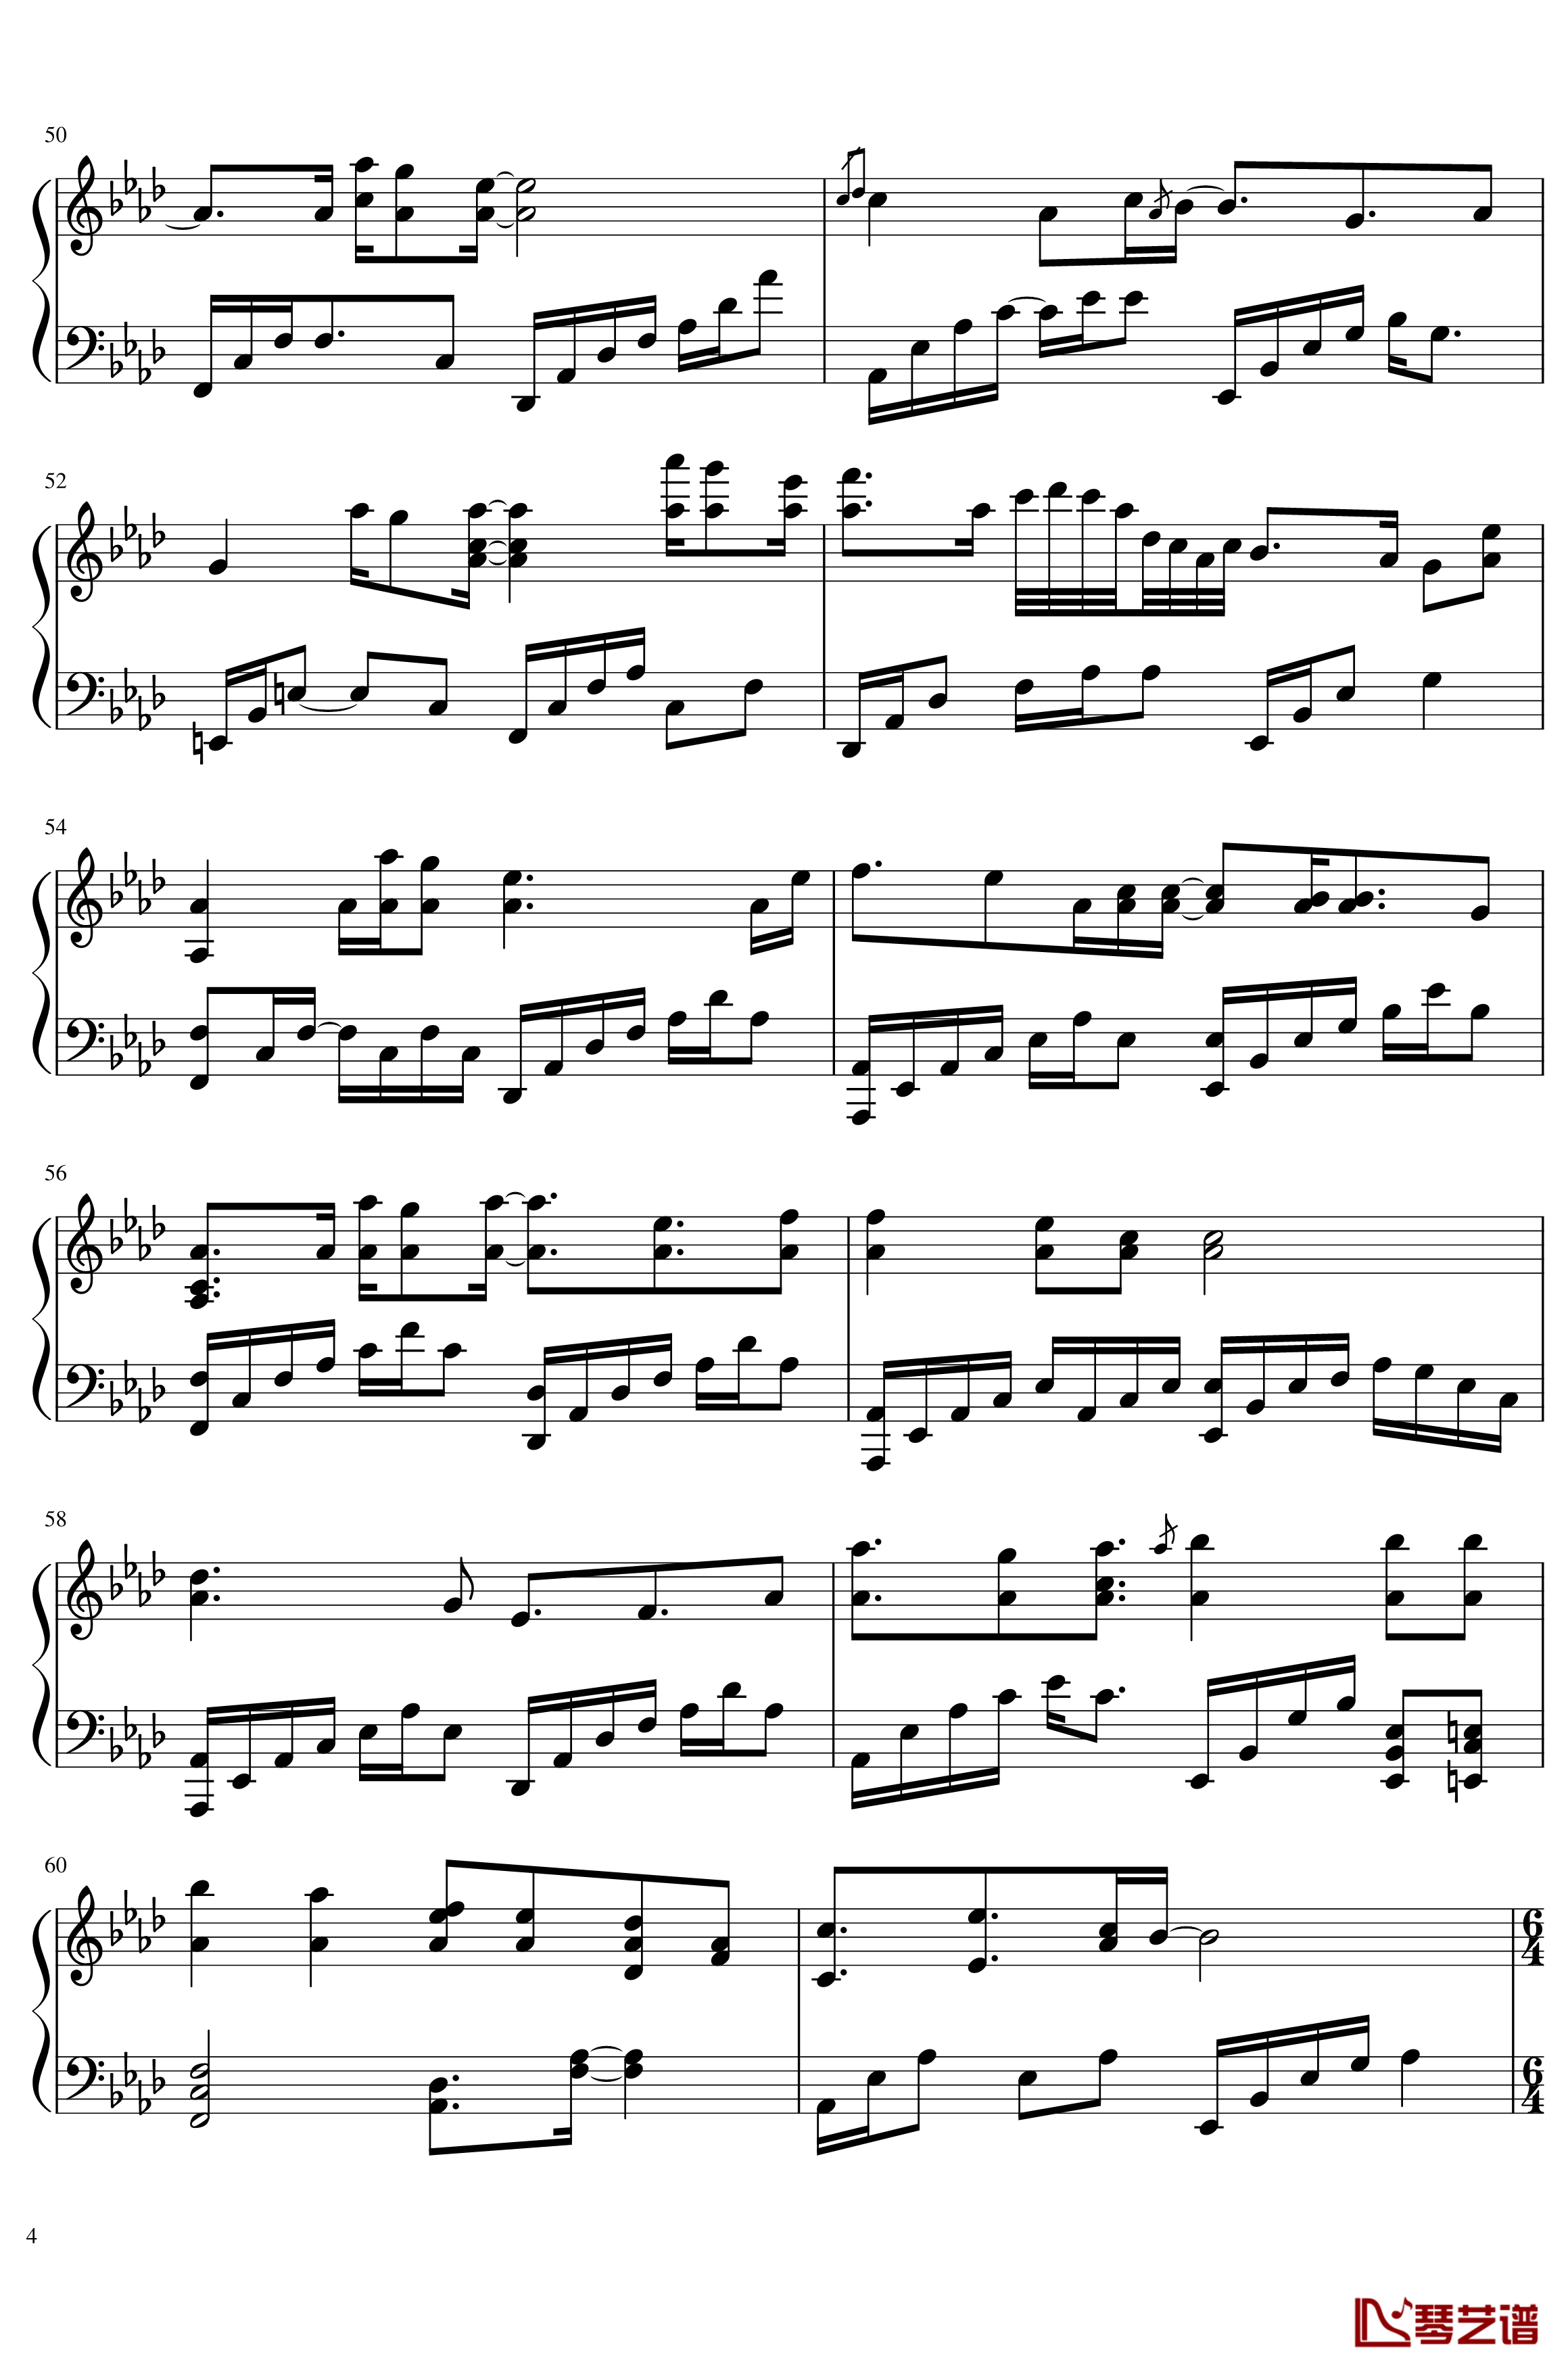 Hold on a little longer钢琴谱- Xeuphoria